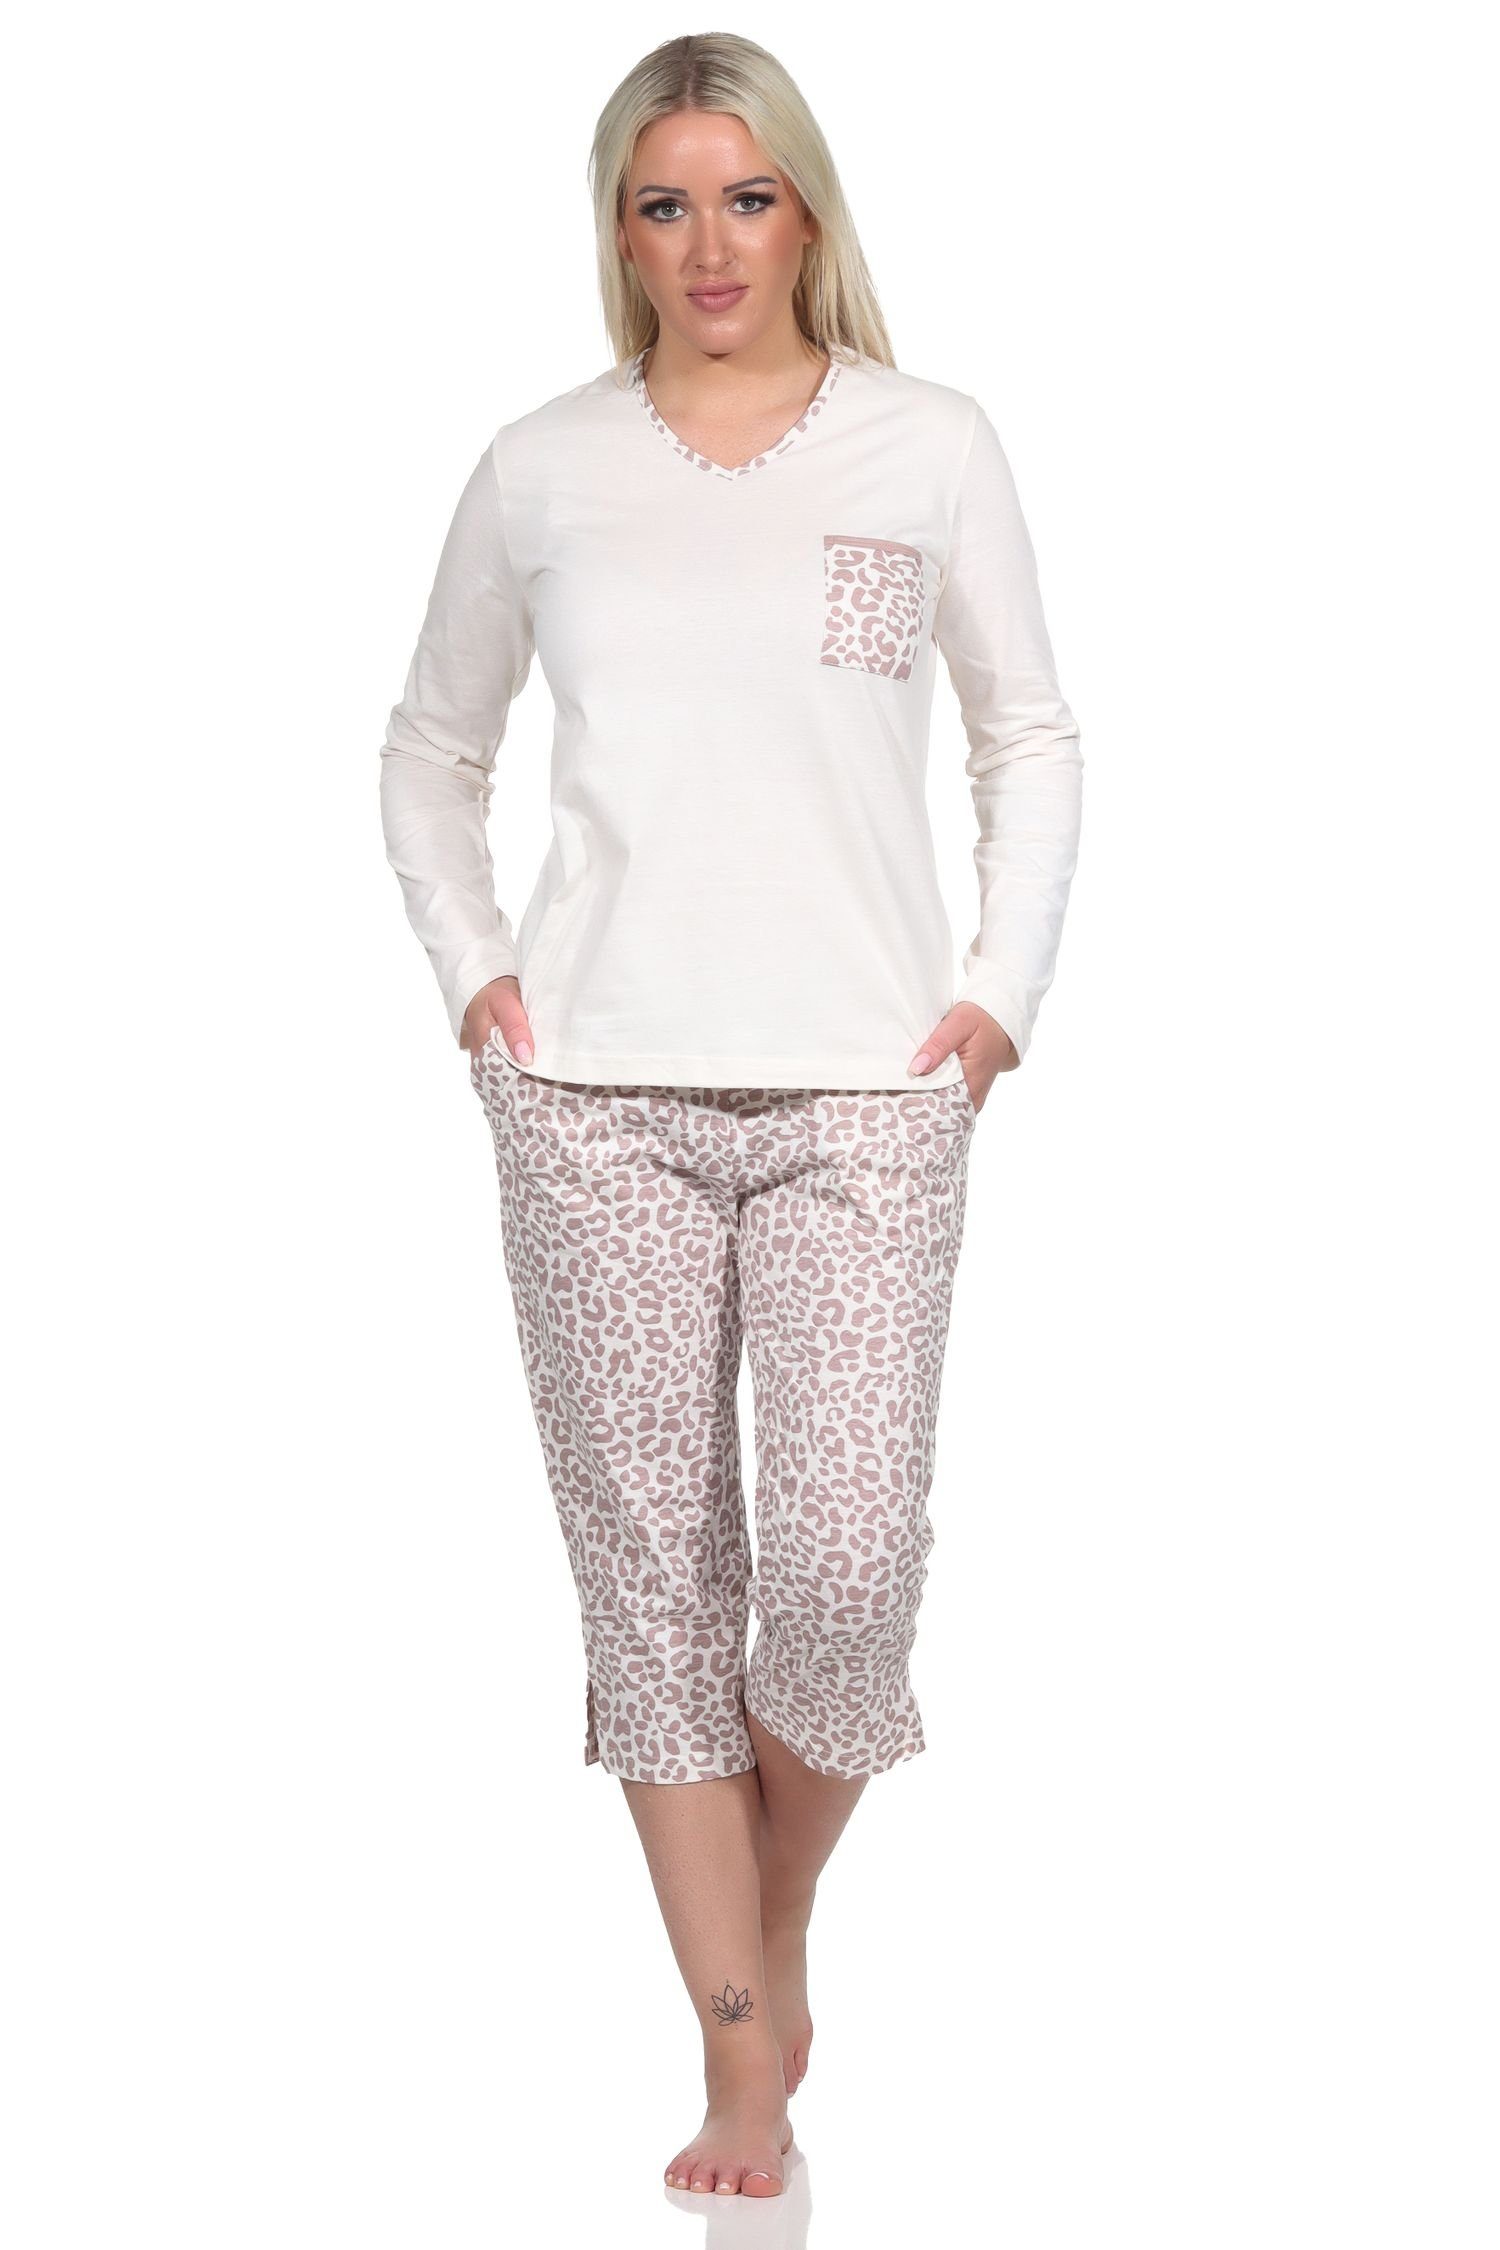 Normann Pyjama Damen Pyjama kurzarm Schlafanzug mit Caprihose in Leo-Print Optik creme | Shortys